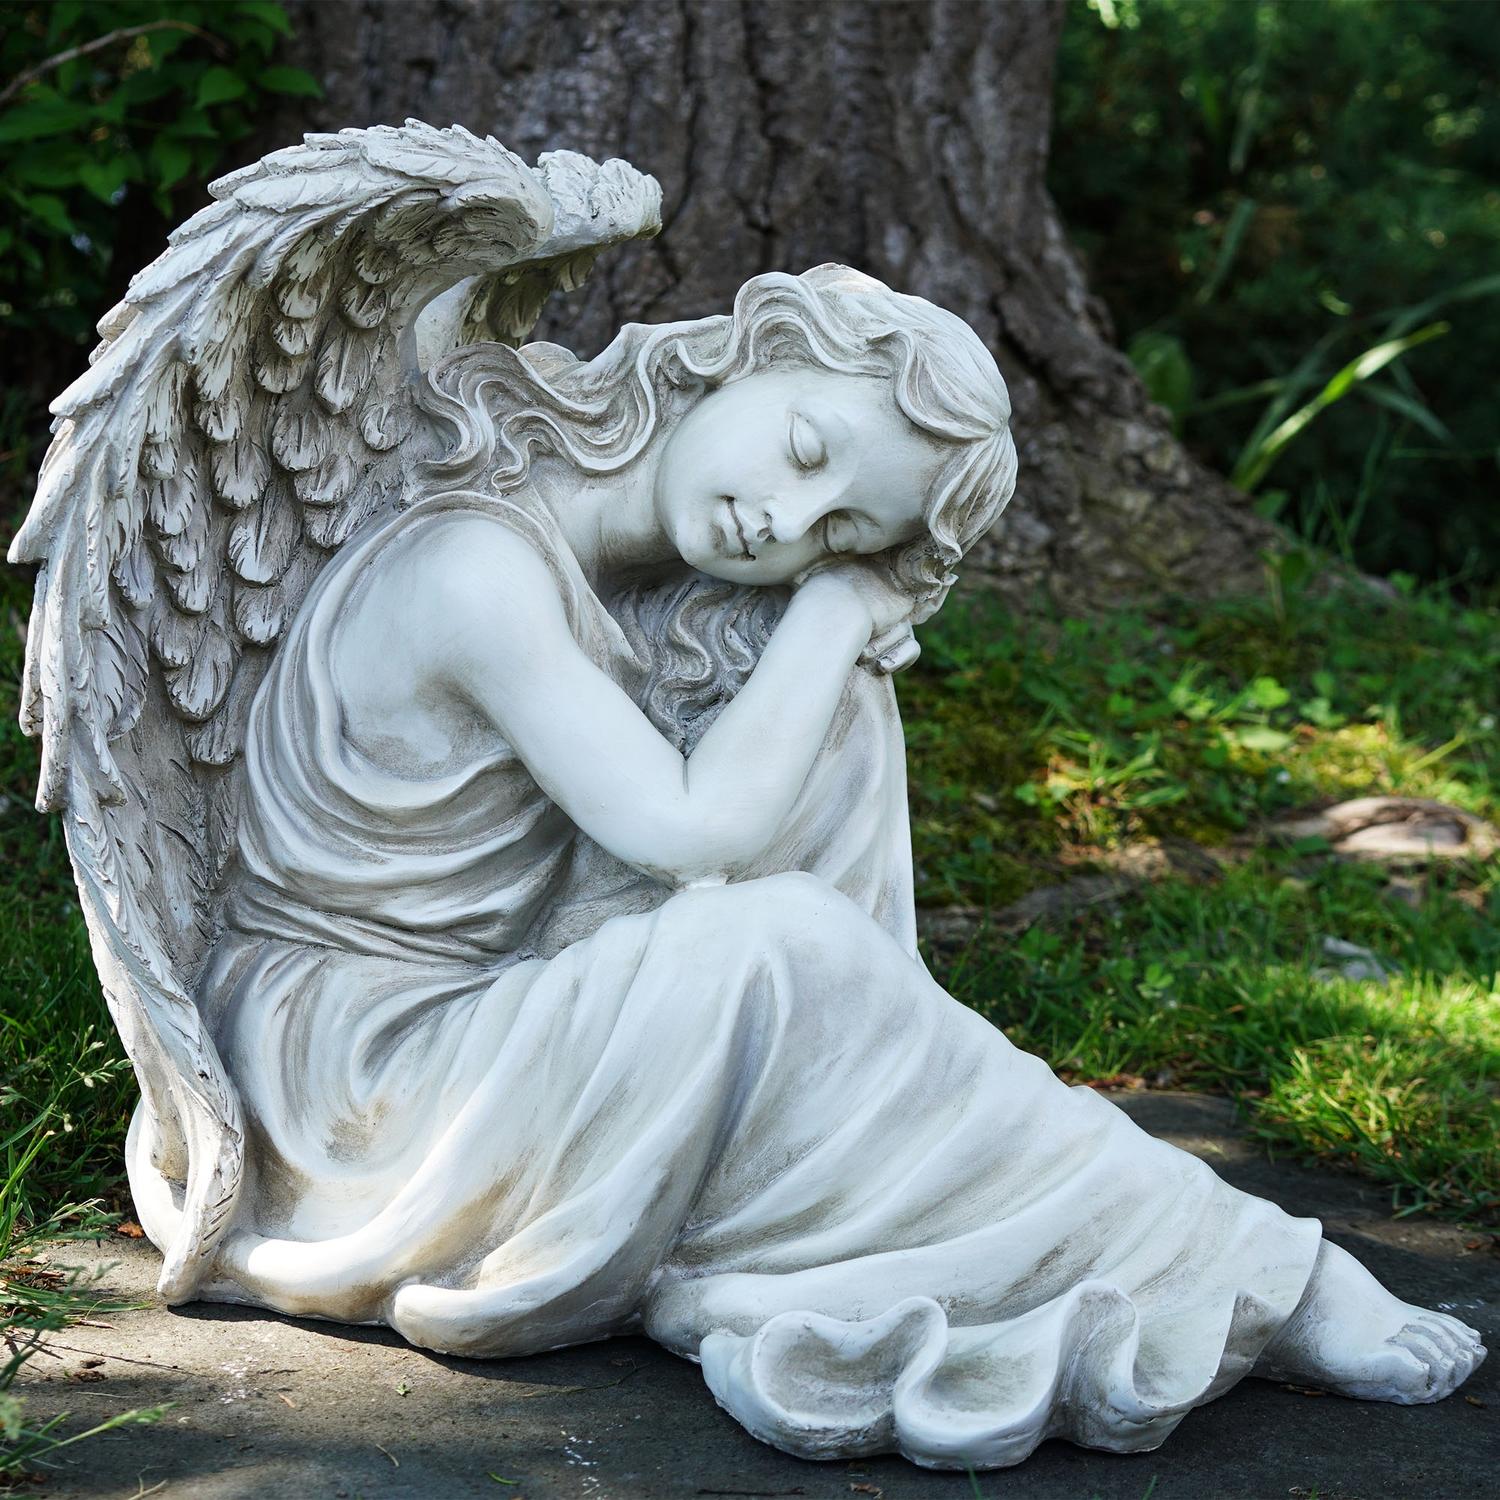 19" Resting Angel Religious Outdoor Garden Statue - image 2 of 4